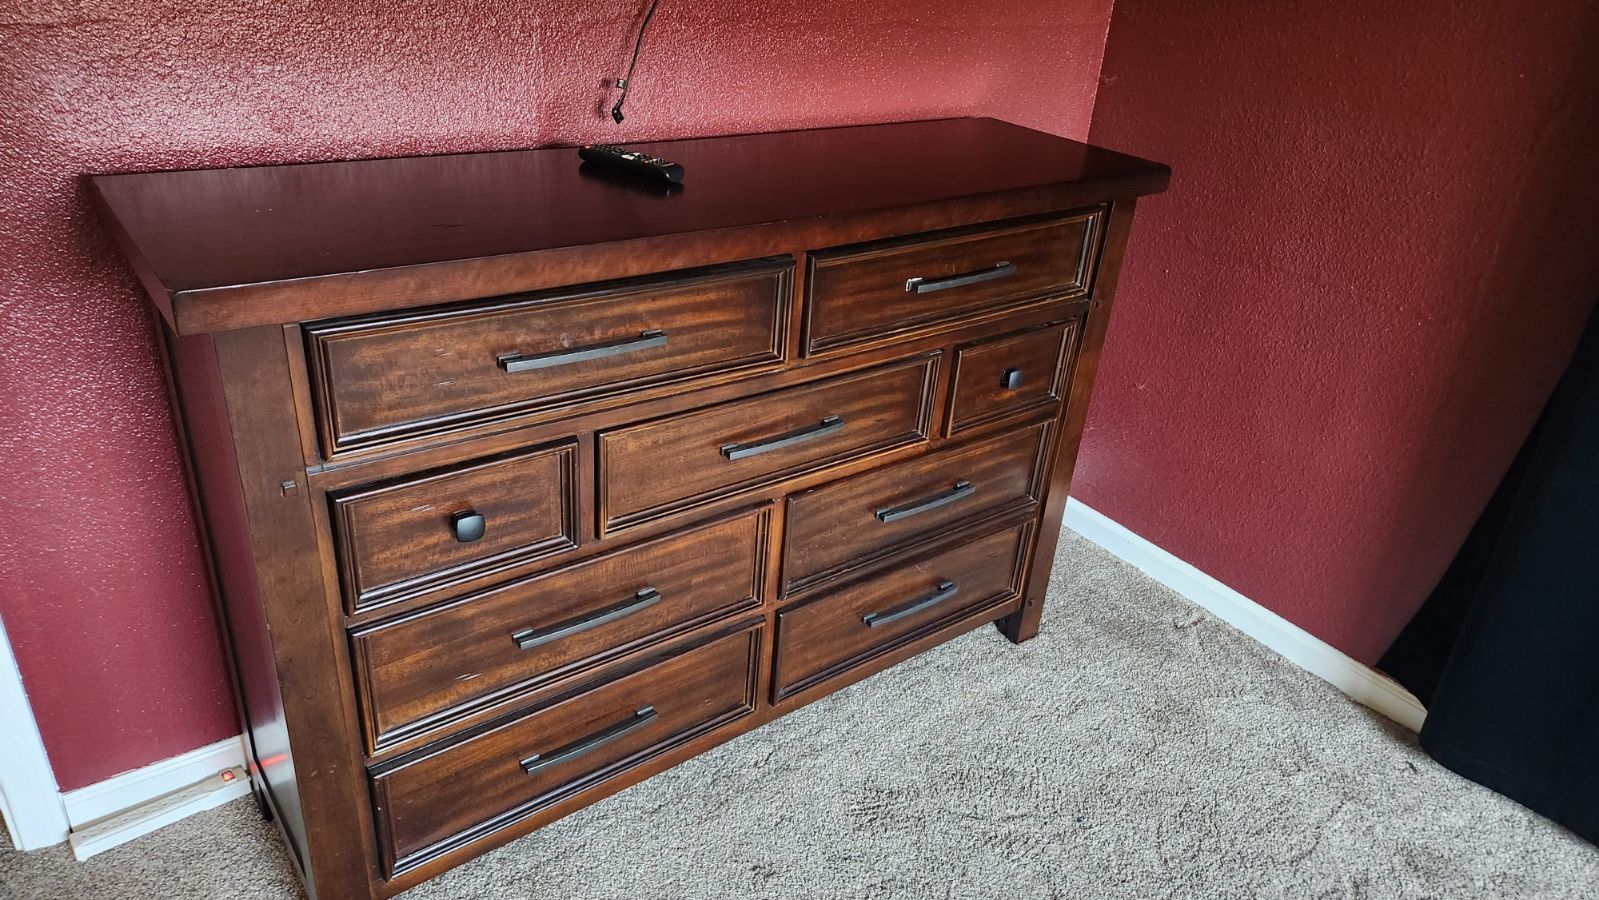 Solid Wood Dresser - Ashley Furniture 